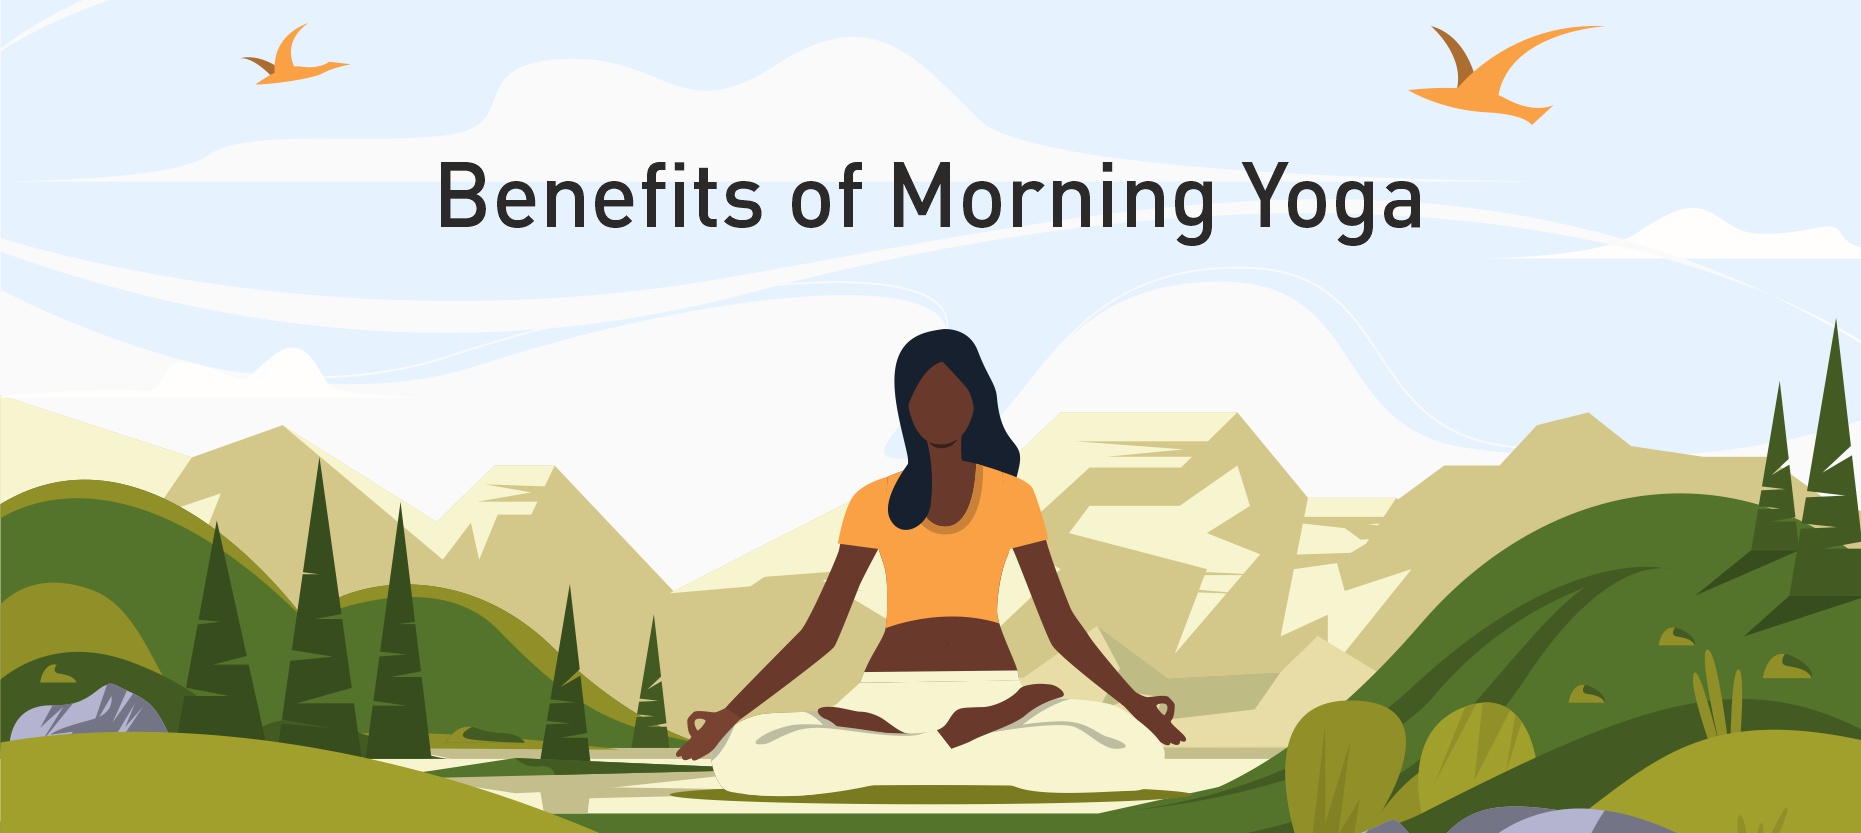 Benefits of Morning Yoga